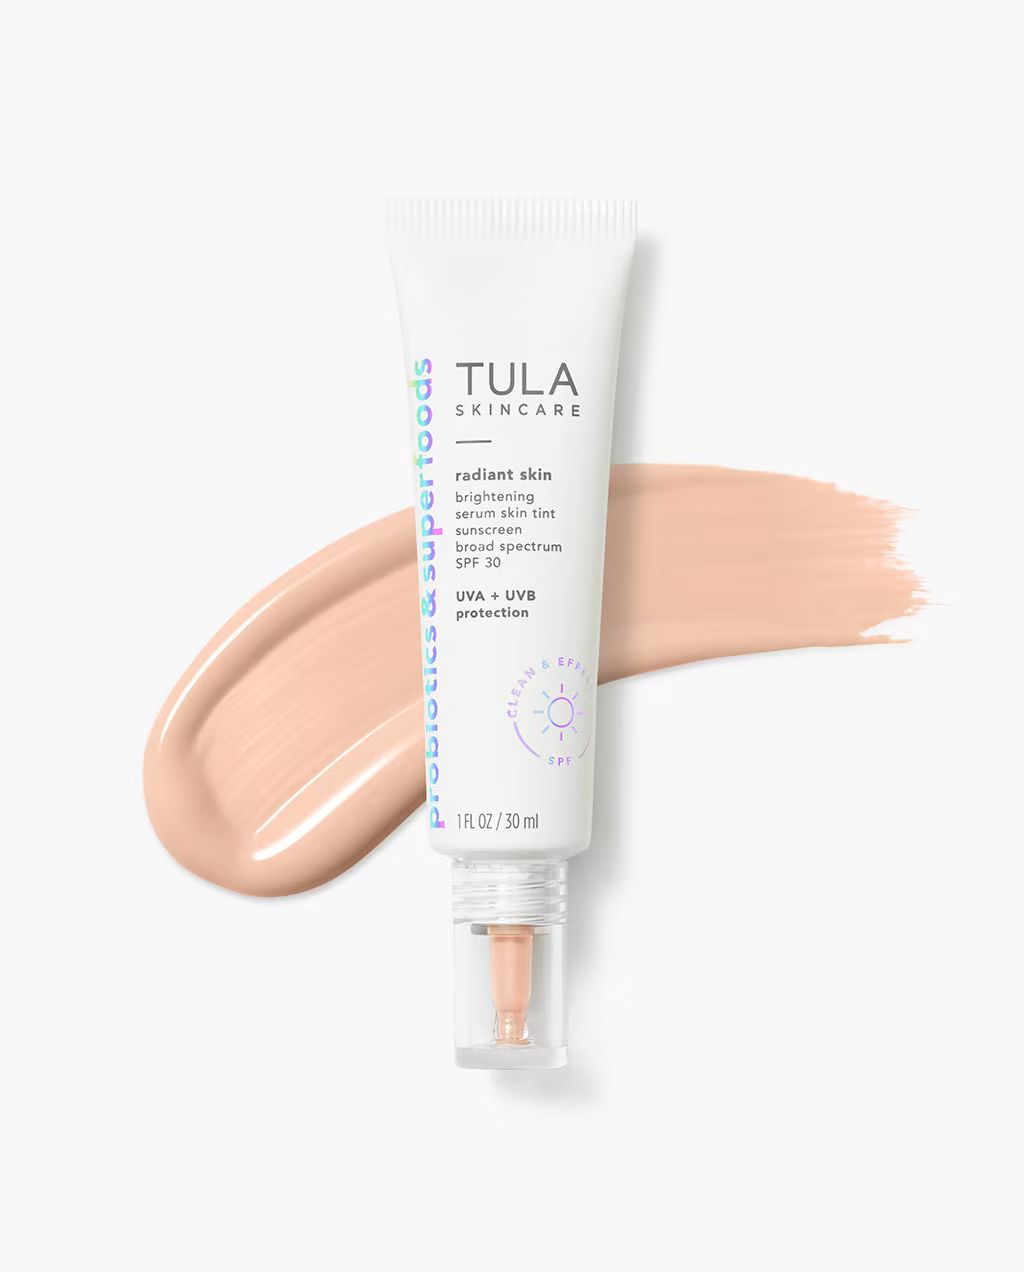 brightening serum skin tint sunscreen broad spectrum SPF 30 | Tula Skincare